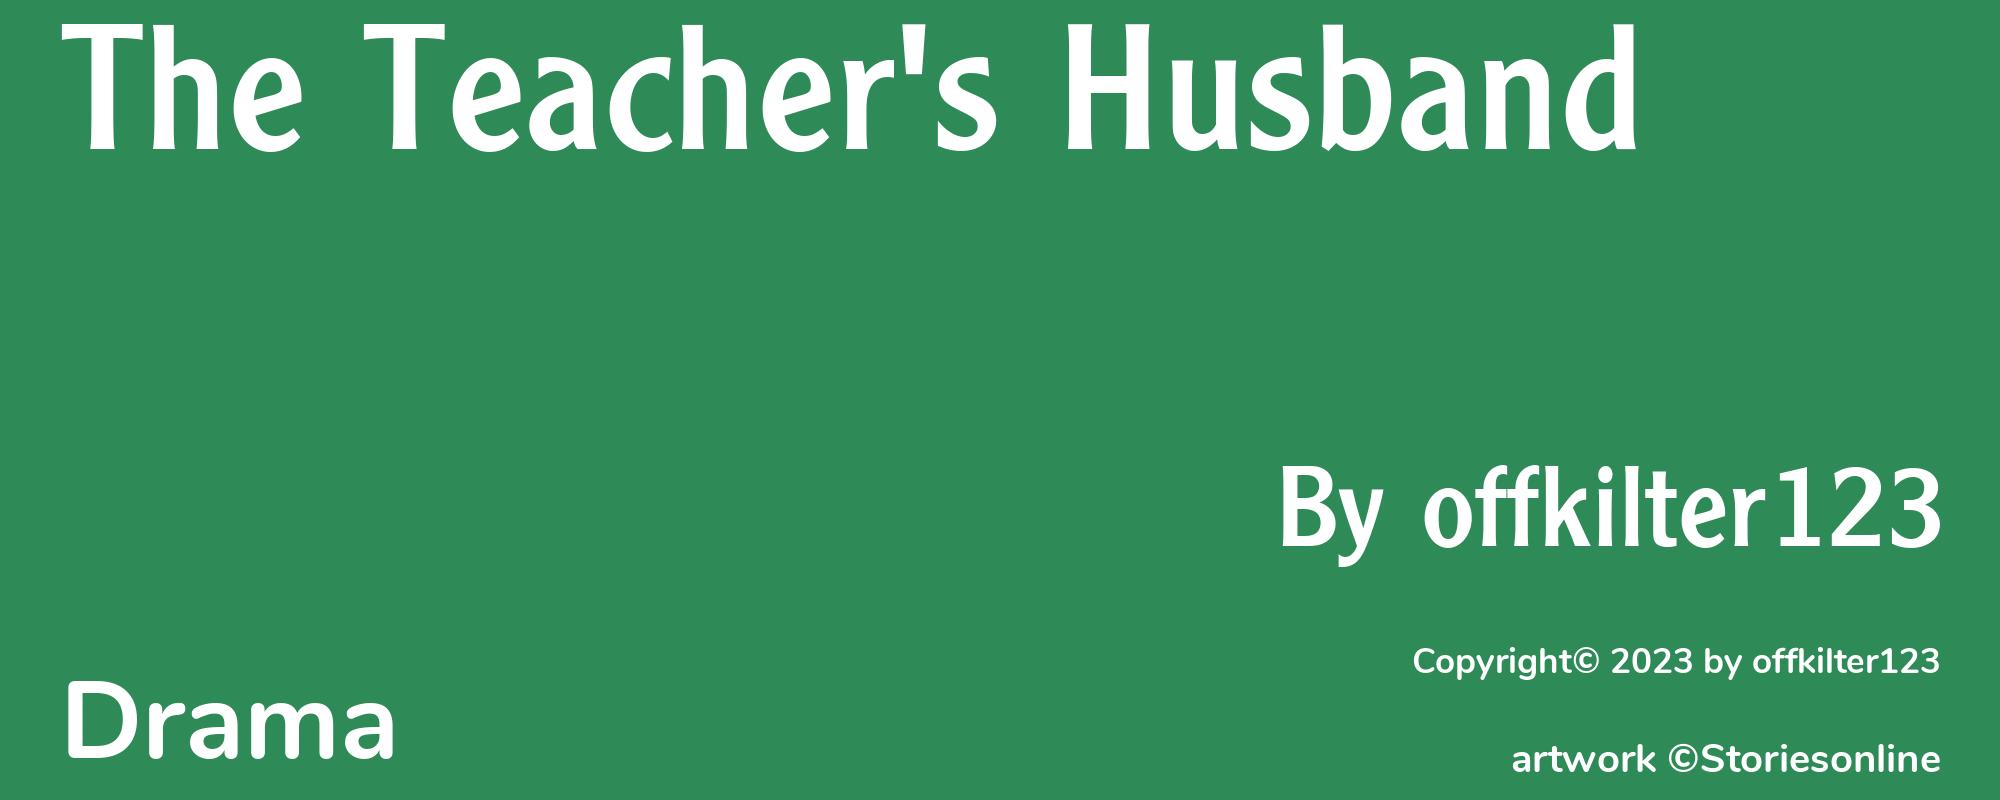 The Teacher's Husband - Cover